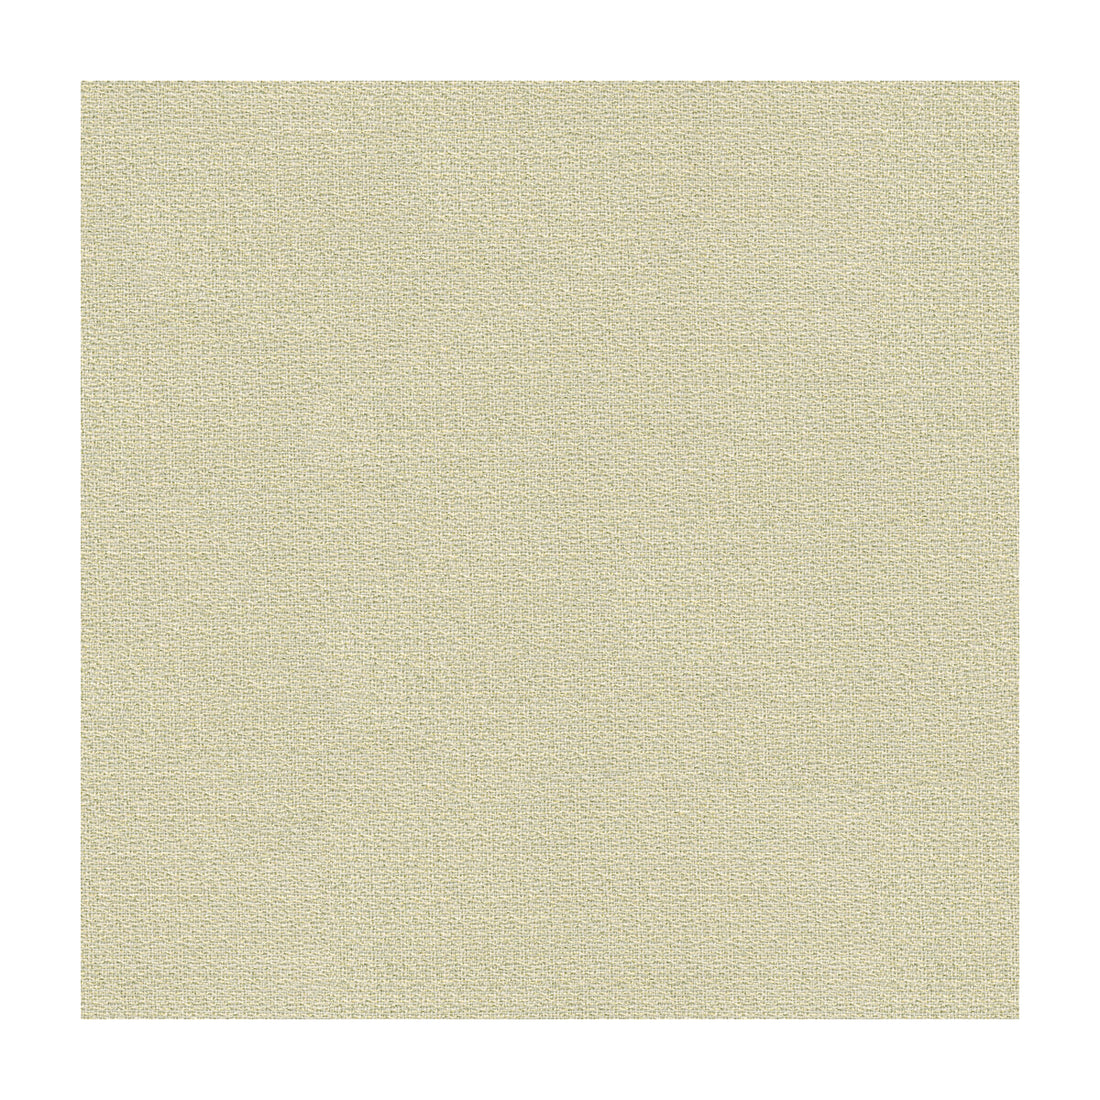 Glisten Wool fabric in grey/gold color - pattern GWF-3045.411.0 - by Lee Jofa Modern